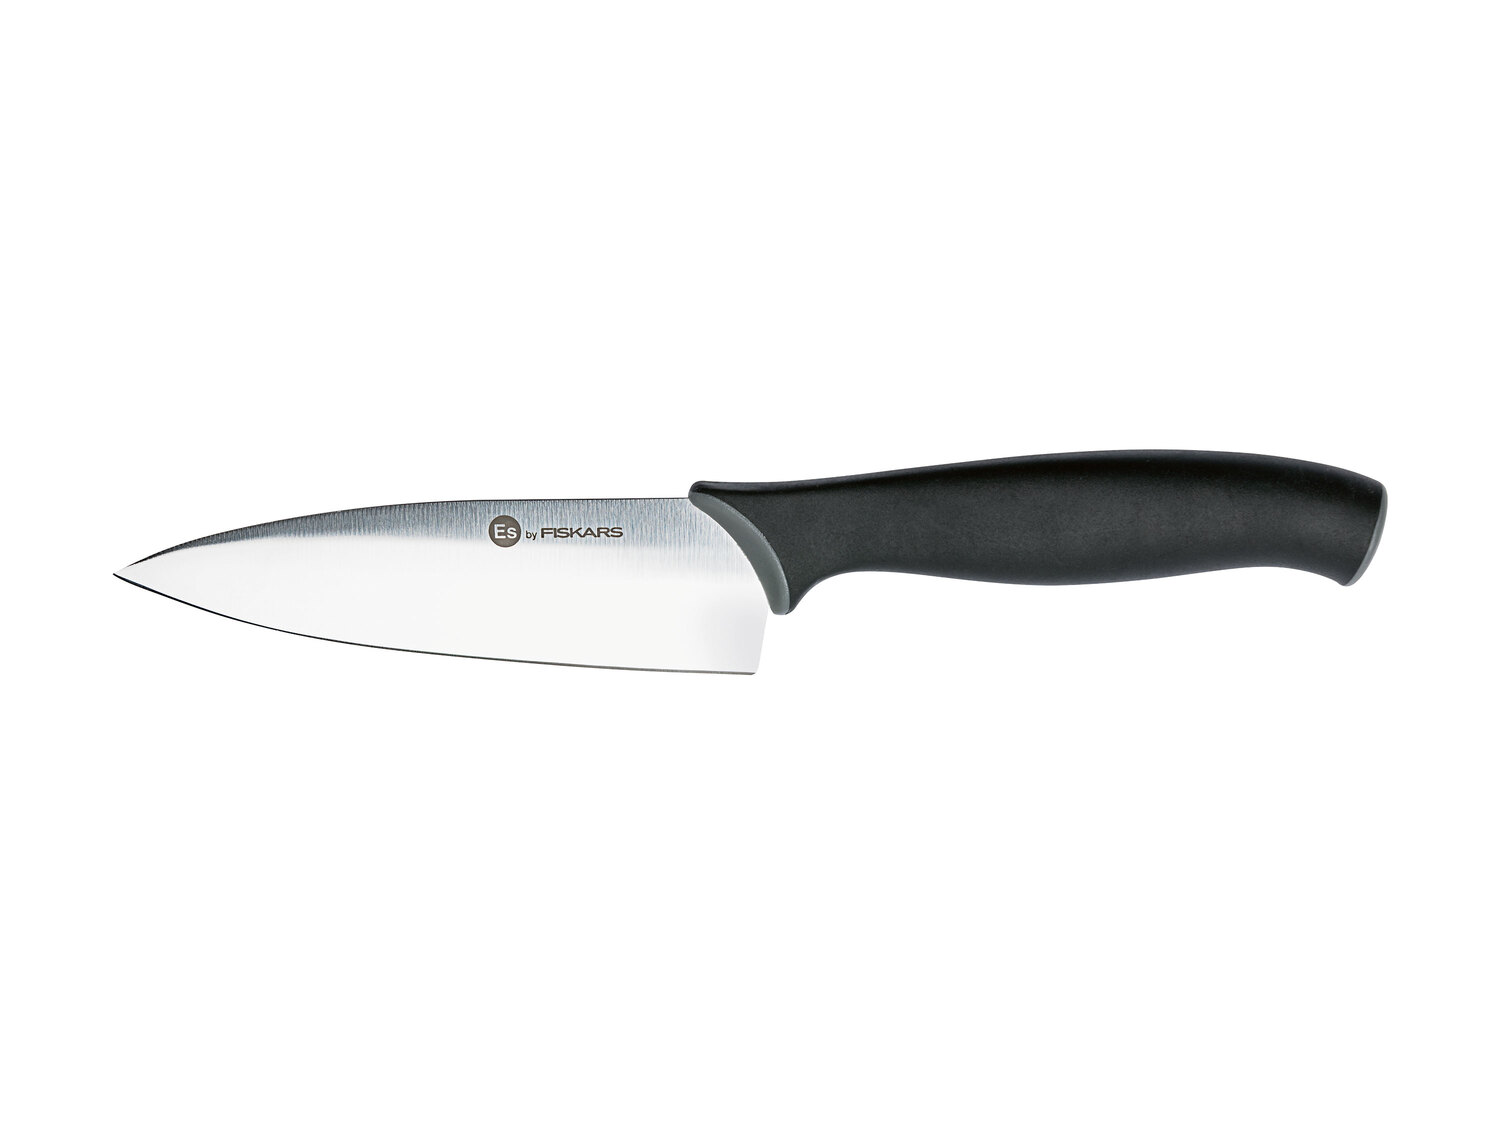 Fiskars nożyk kuchenny , cena 19,99 PLN  
5 wzorów
Opis